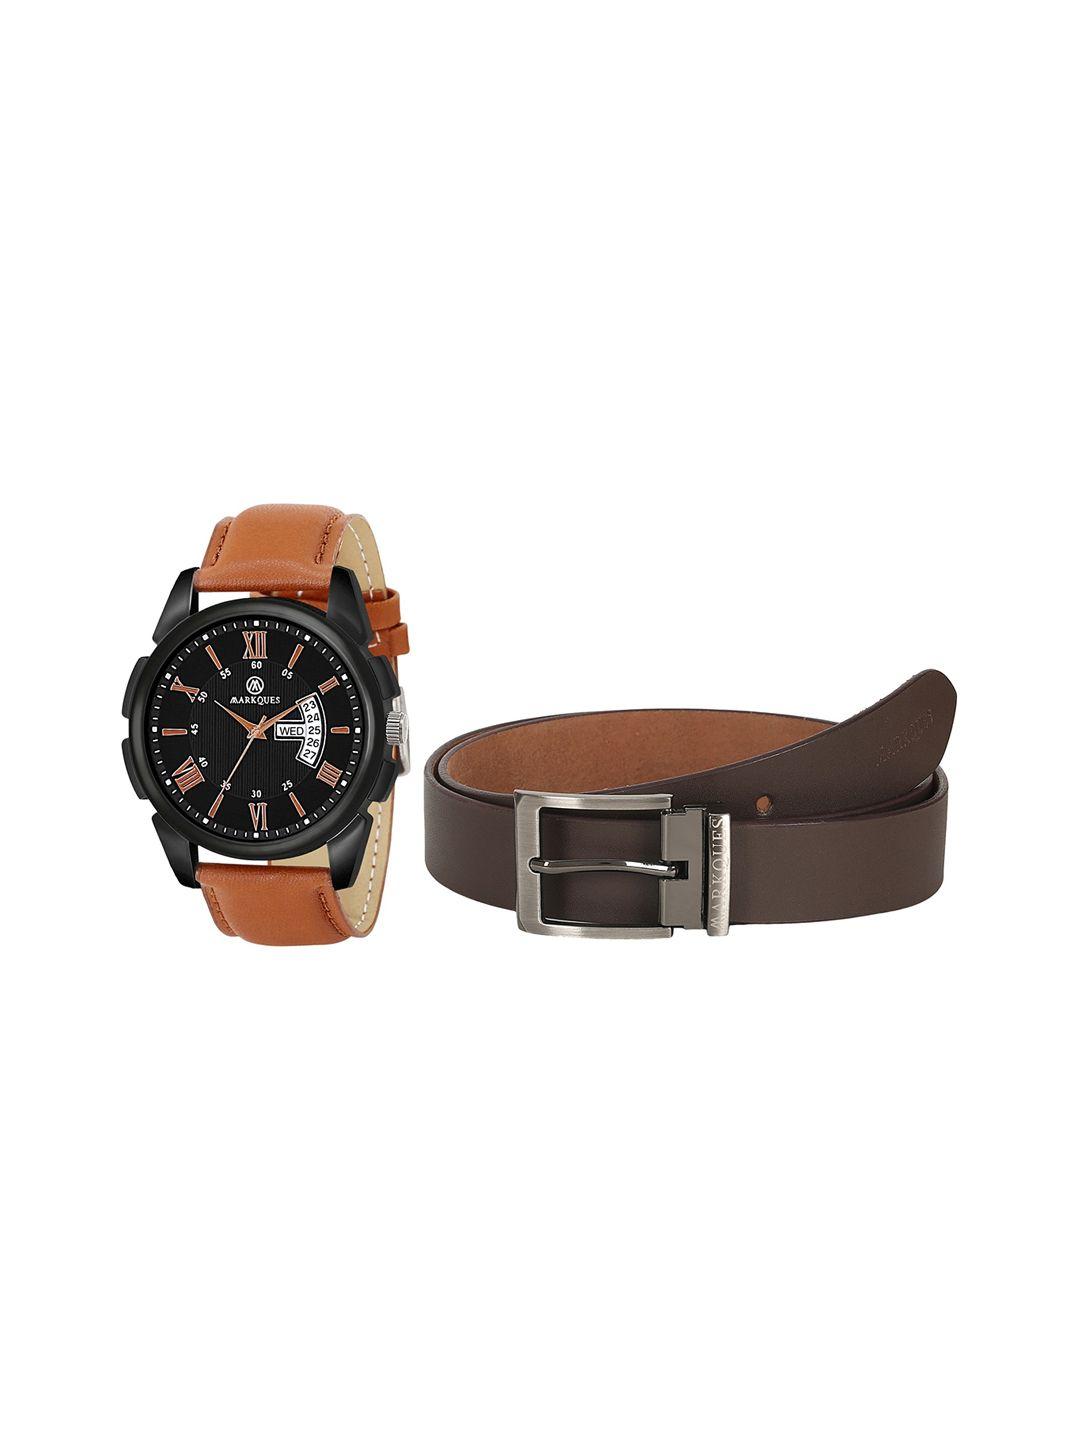 markques men solid leather watch & belt gift set